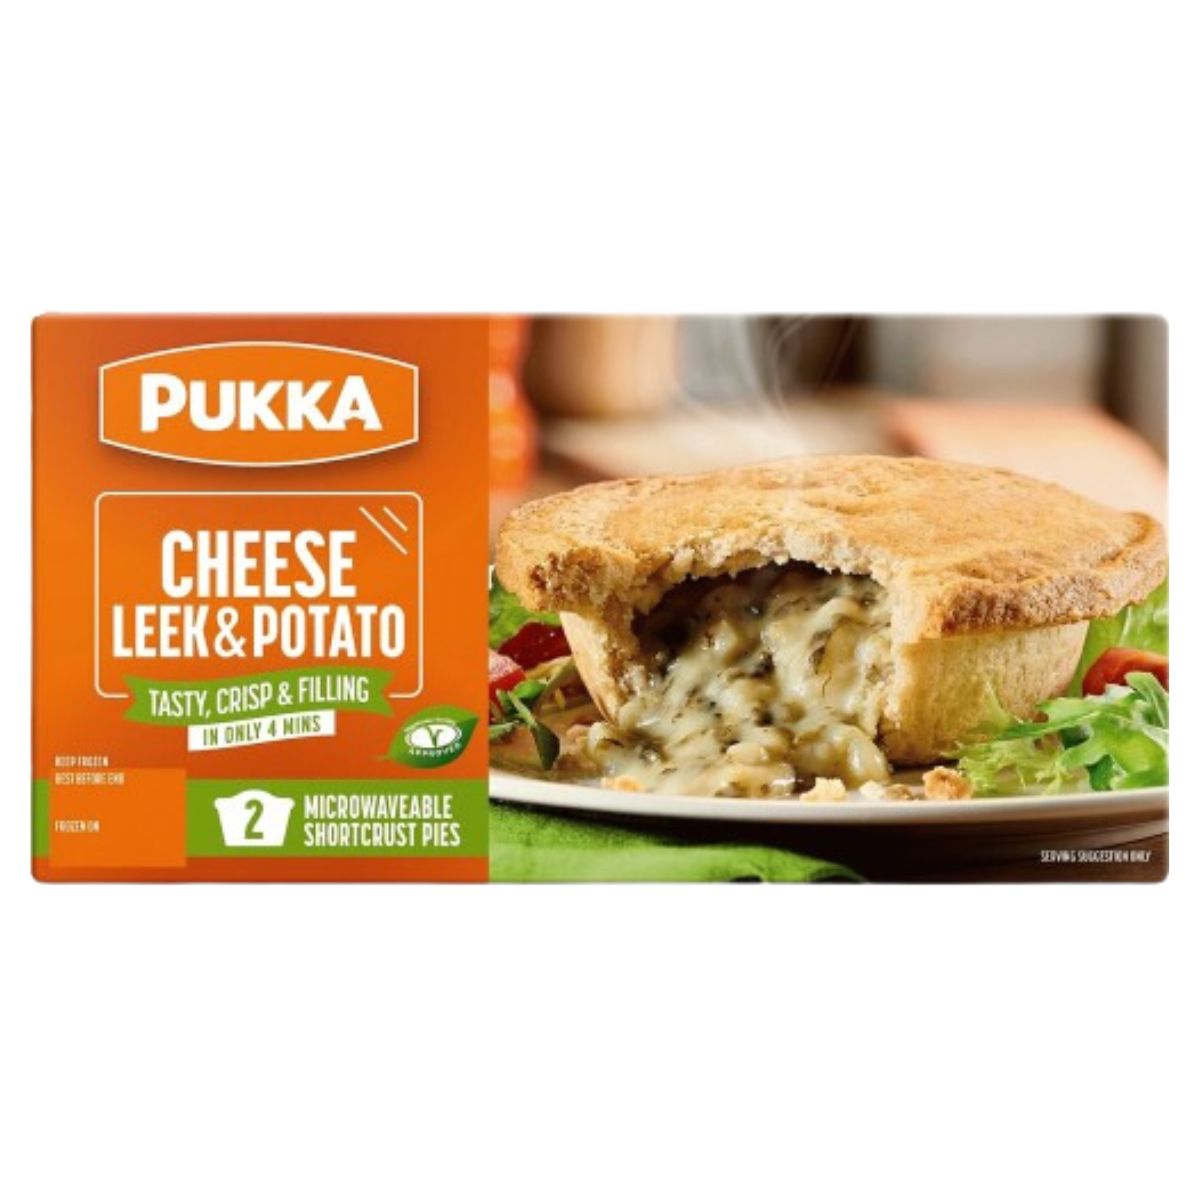 A box of Pukka - Cheese leak & Potato Veggie Pies - 179g.